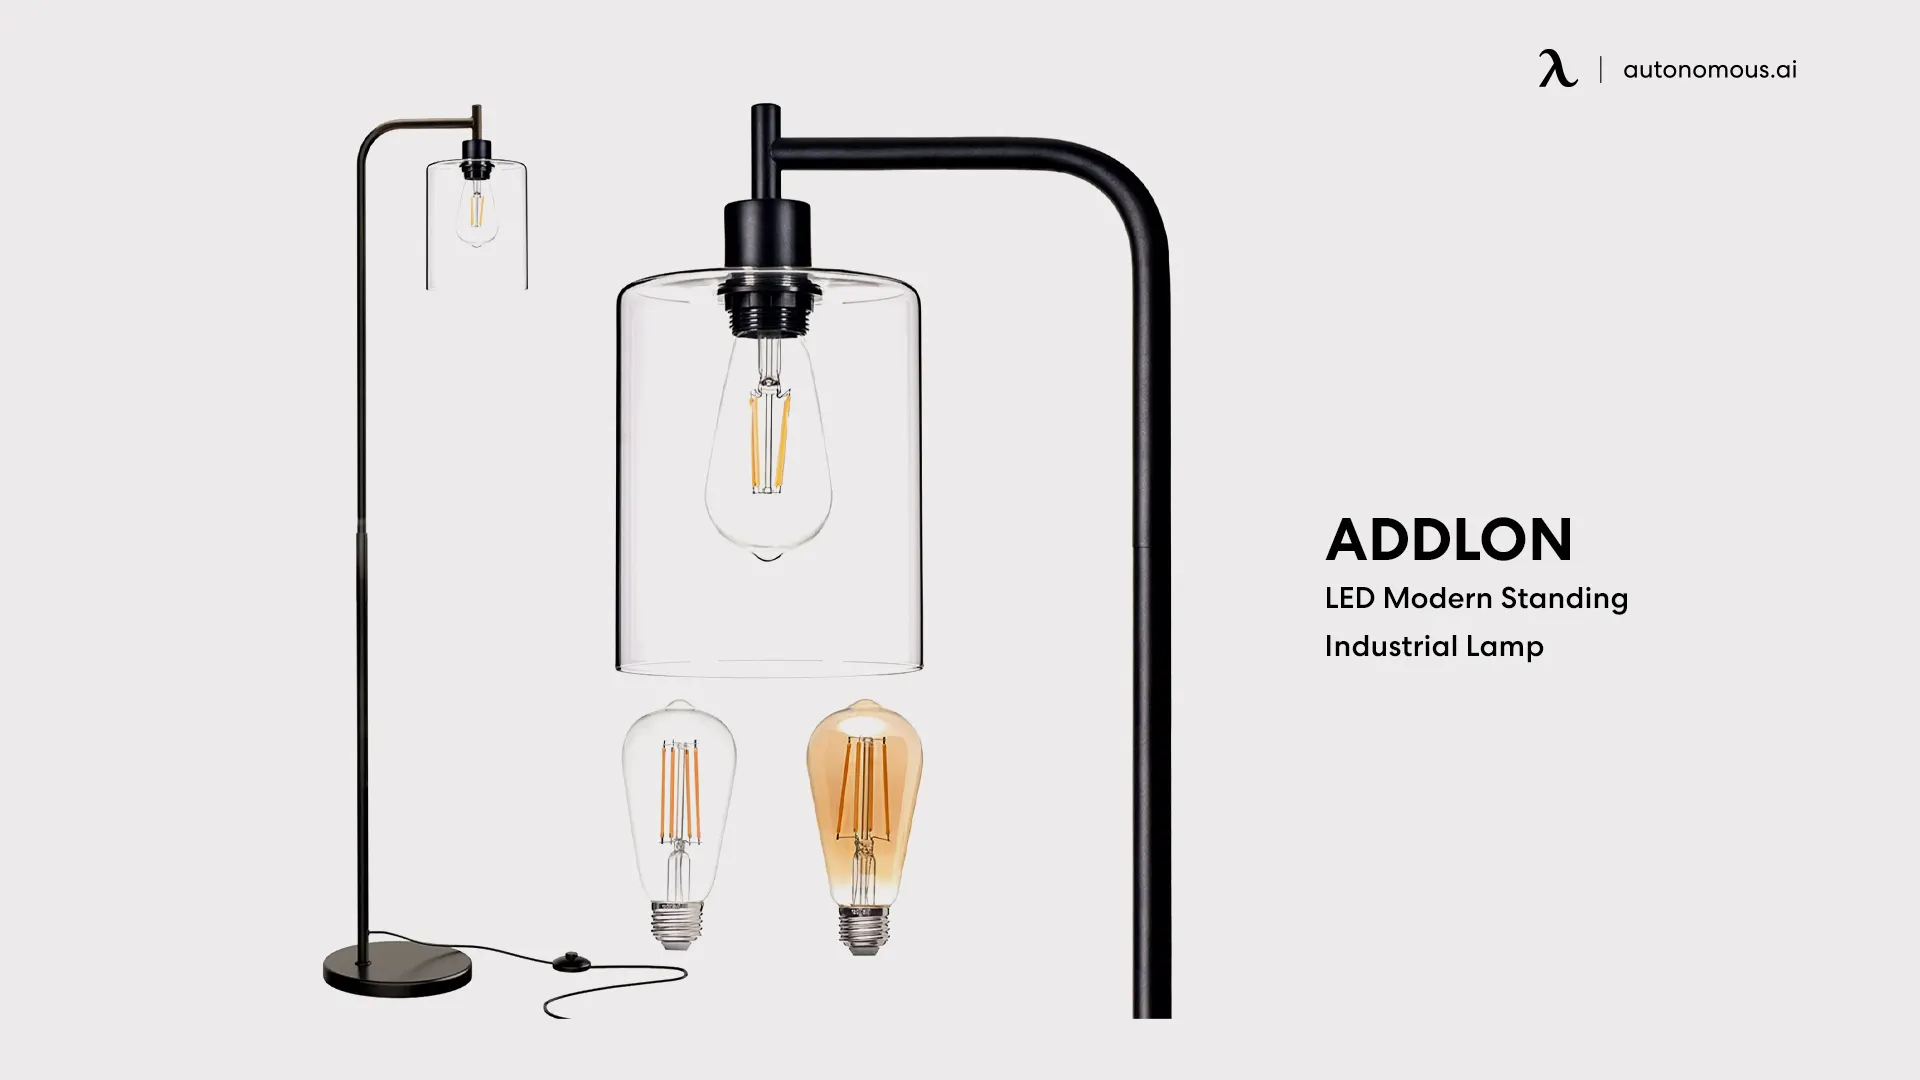 Addlon LED Modern Standing Industrial Lamp